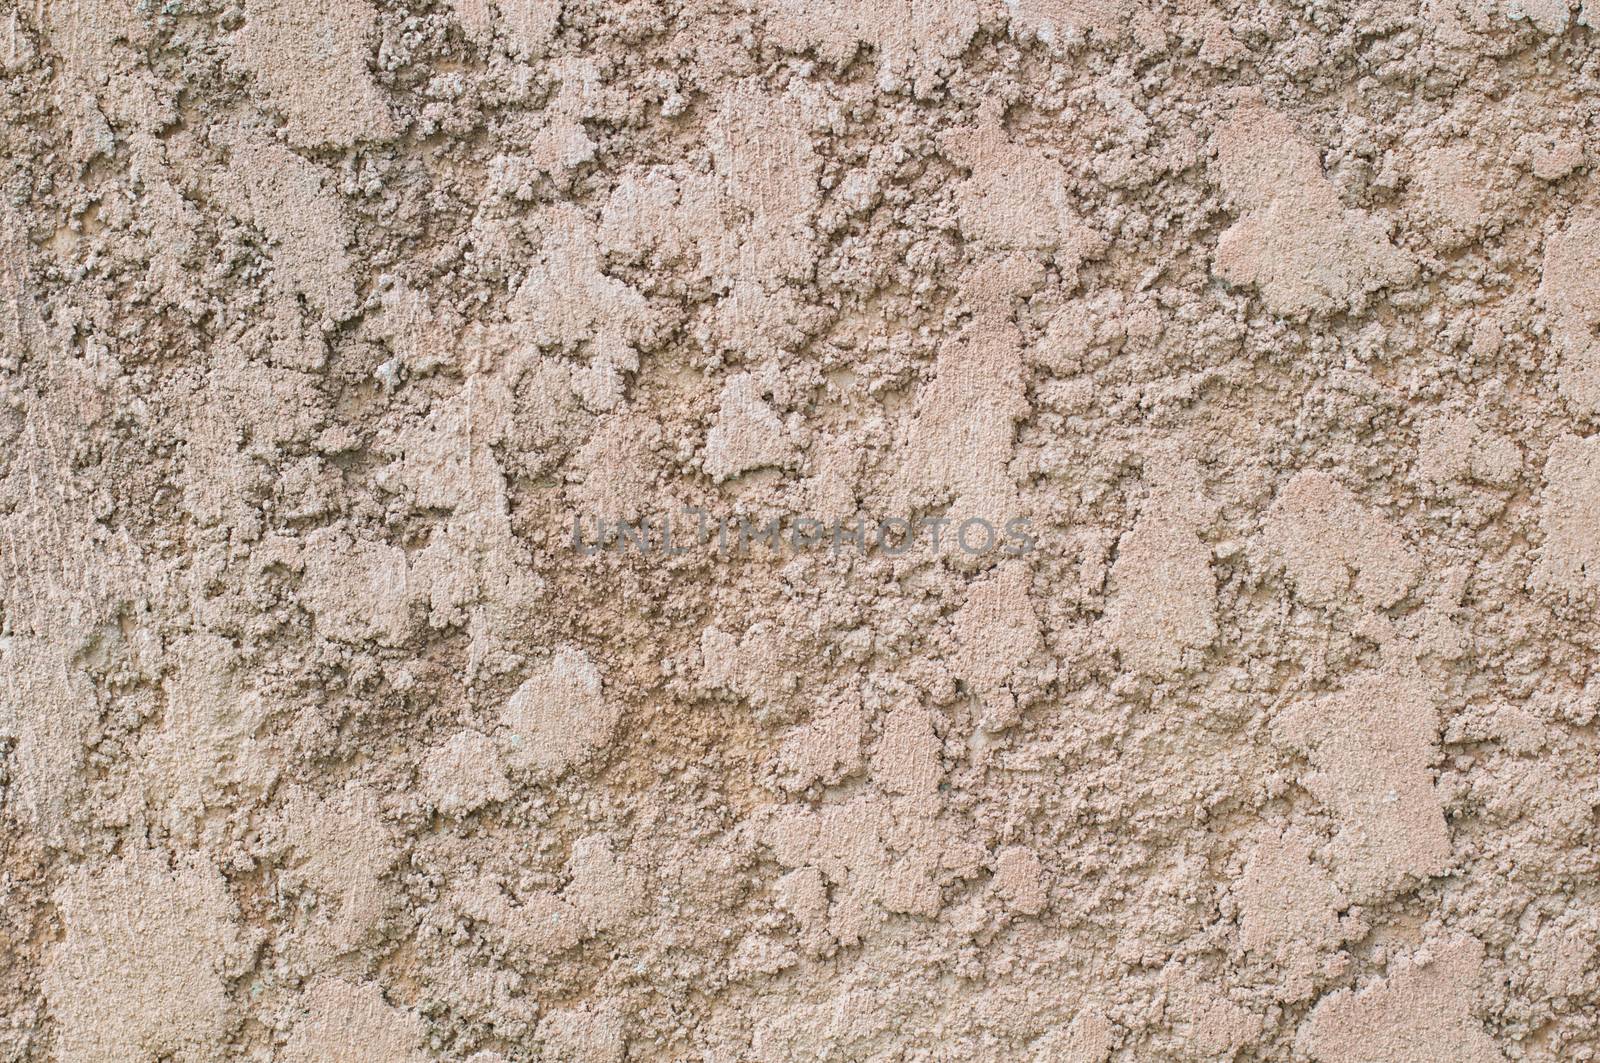 Wall Stucco Texture by Sorapop